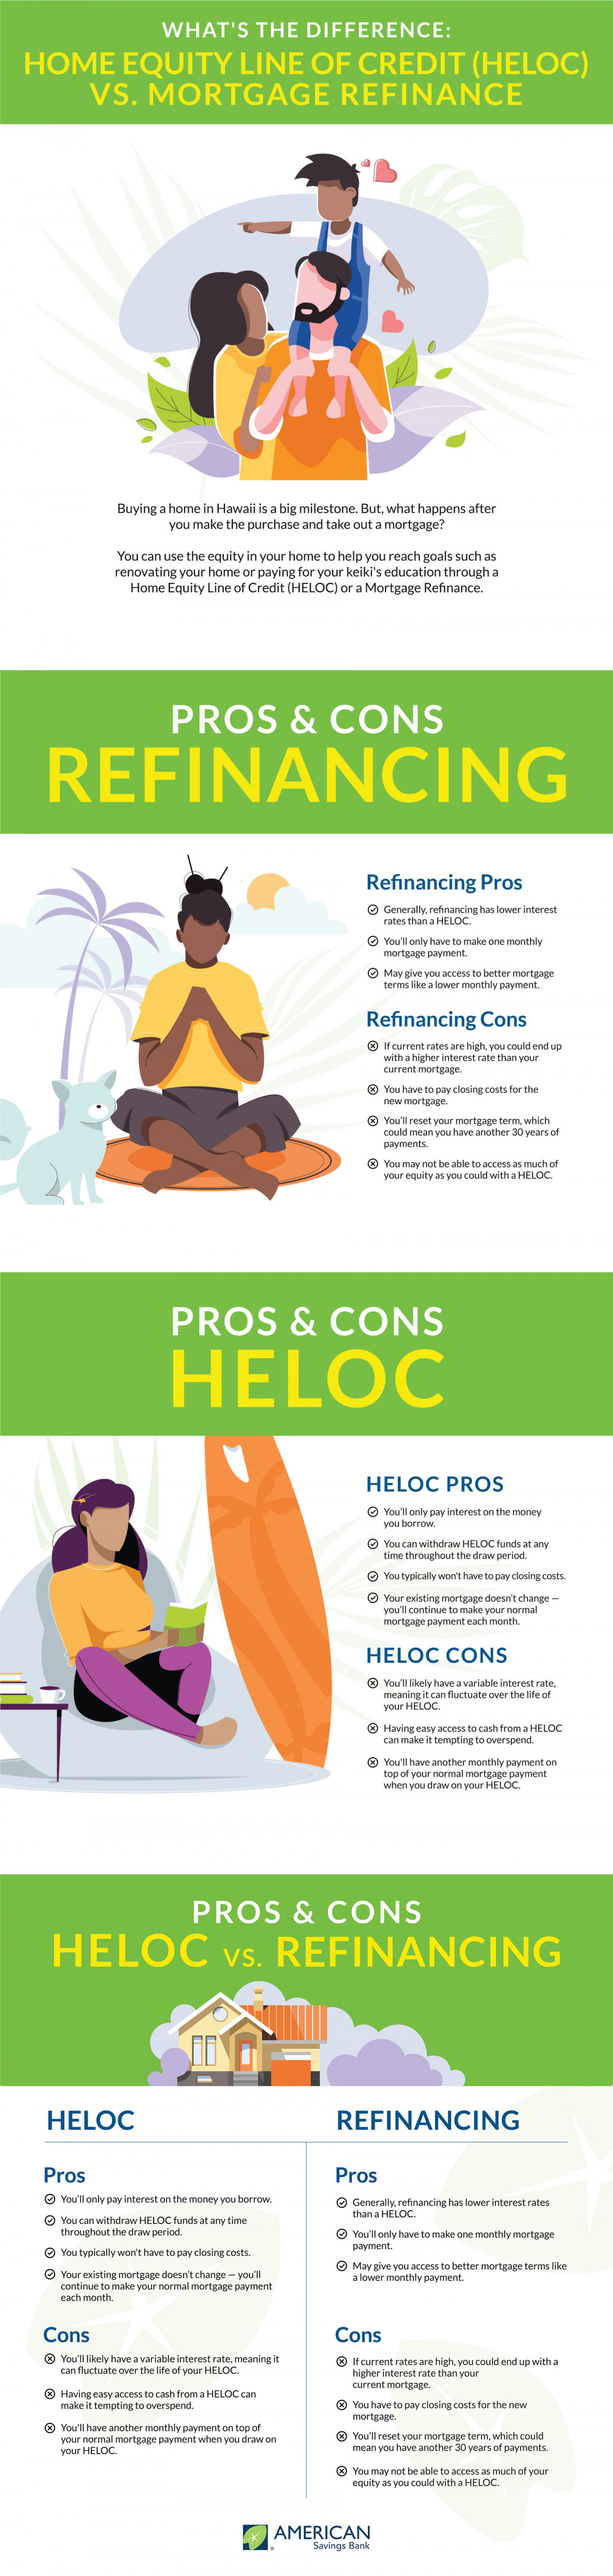 HELOC vs Refinance infographic